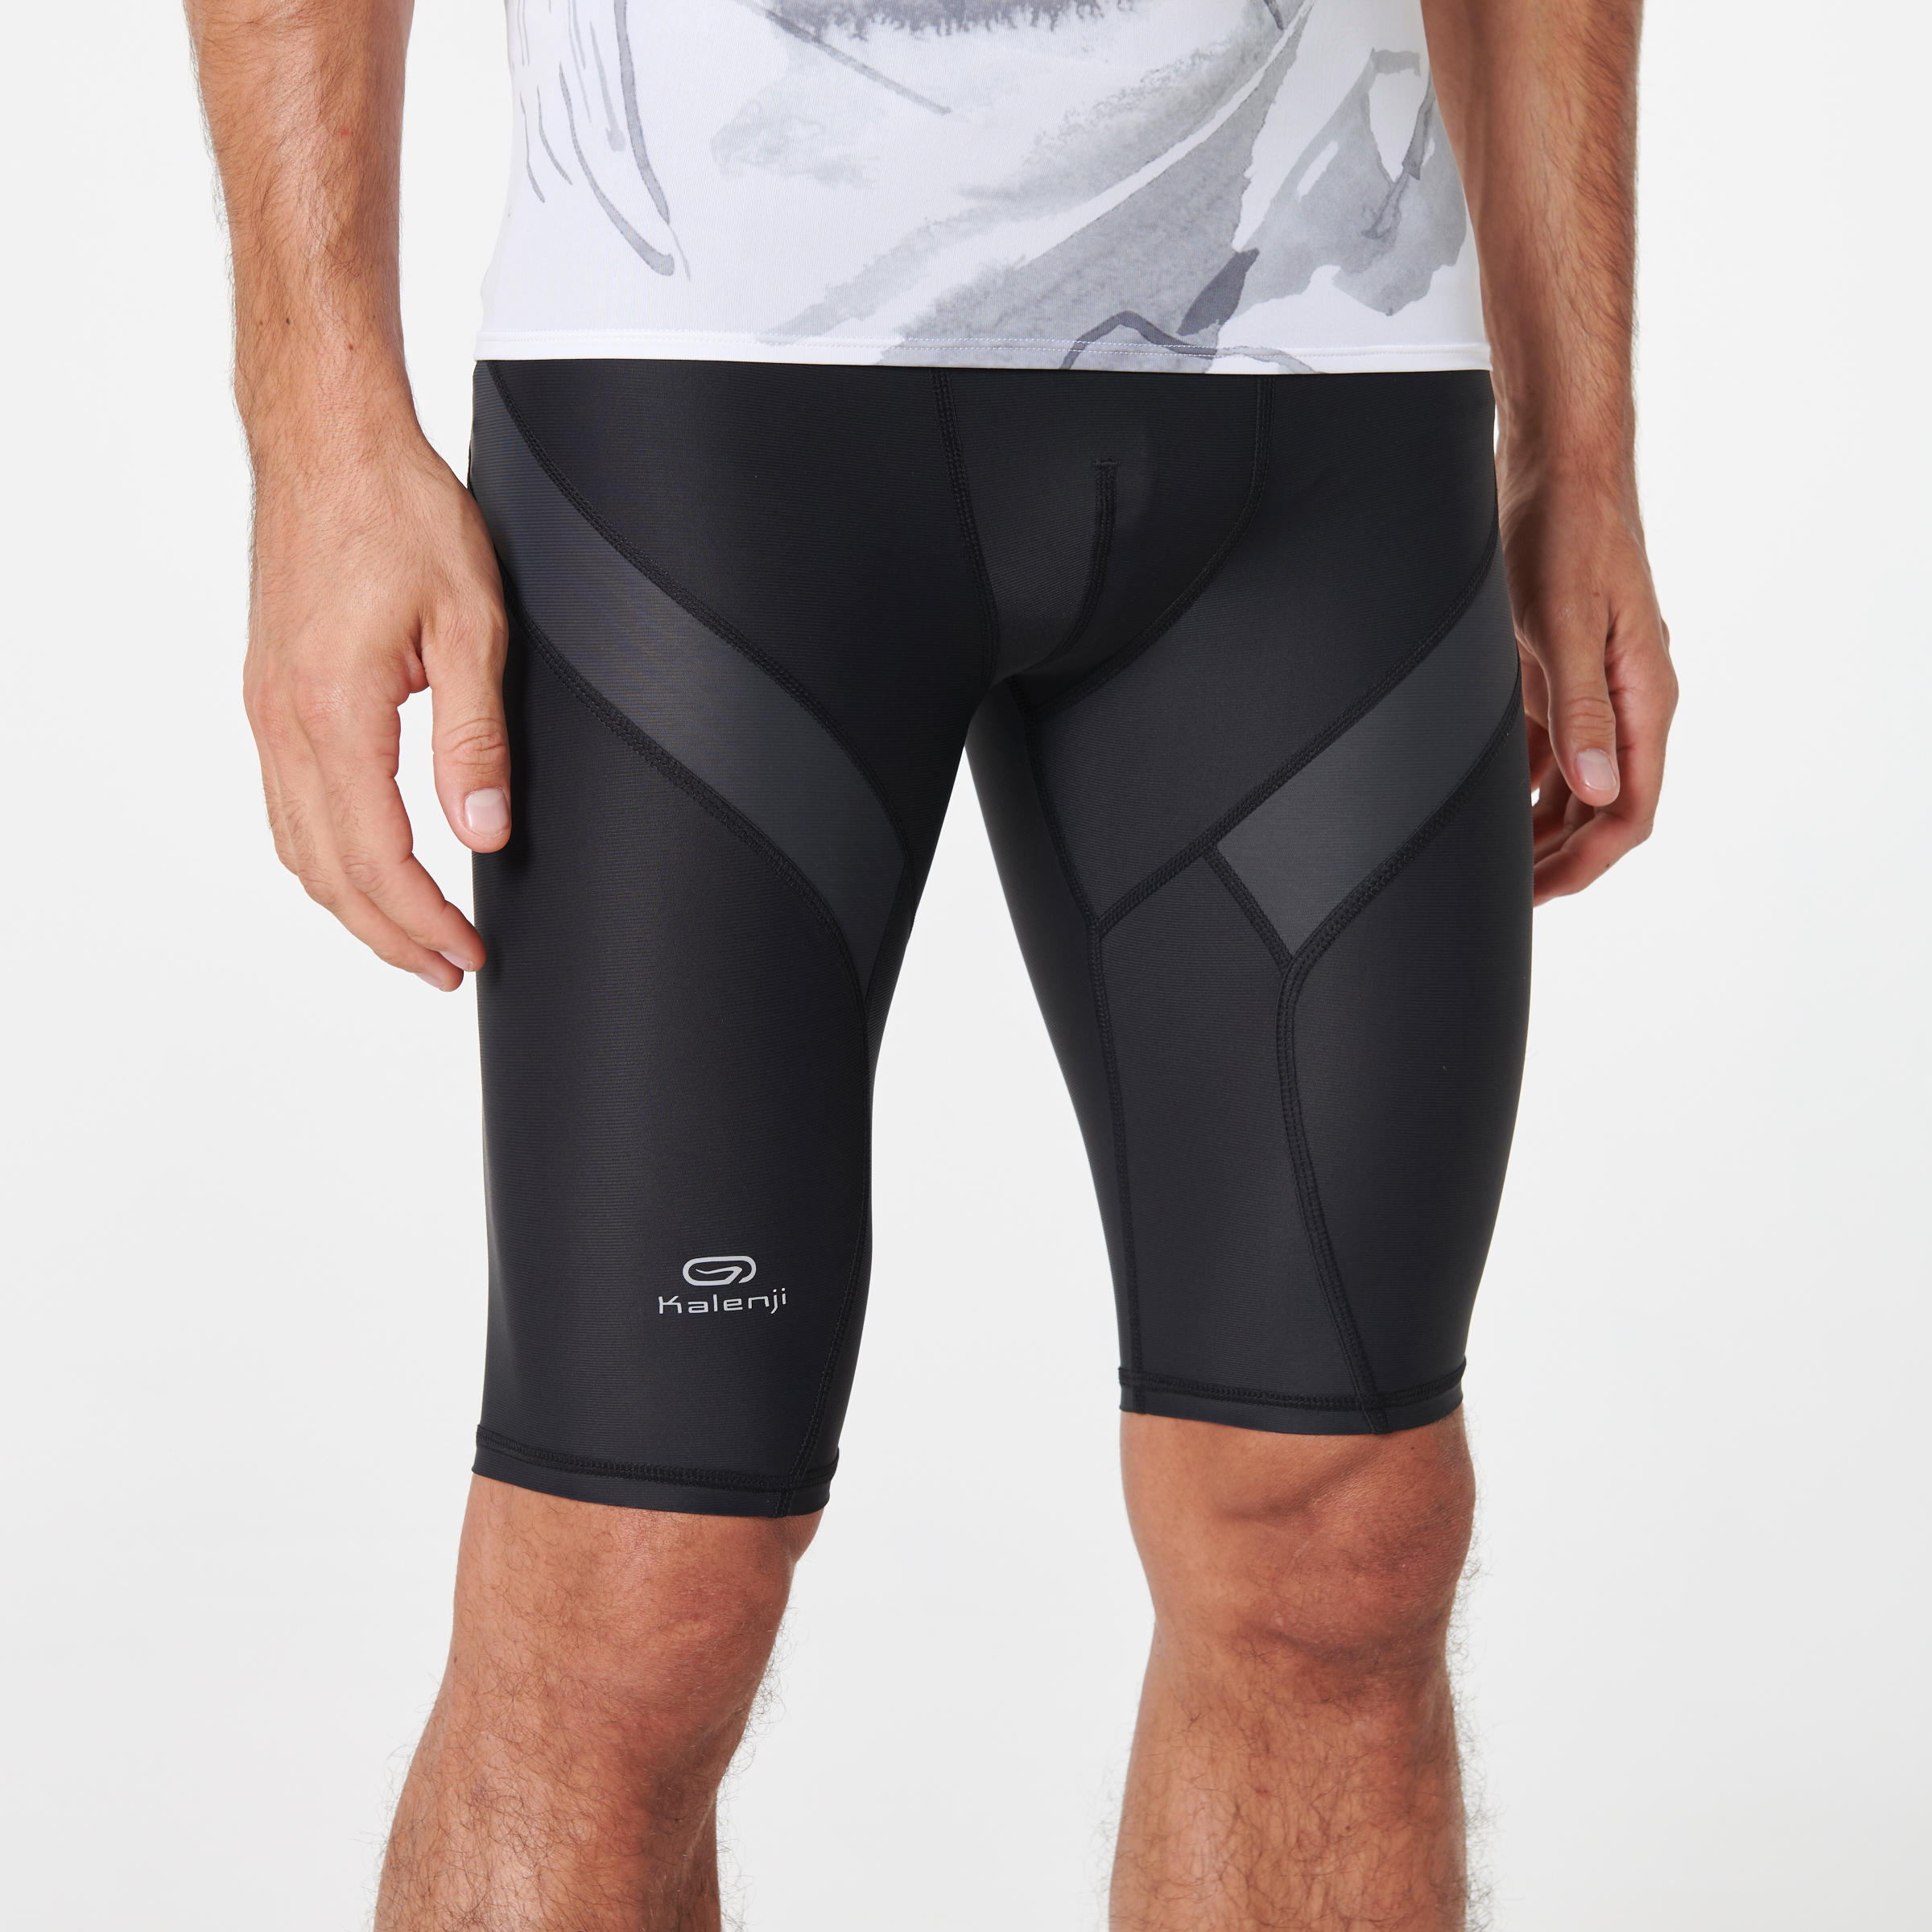 kalenji compression shorts